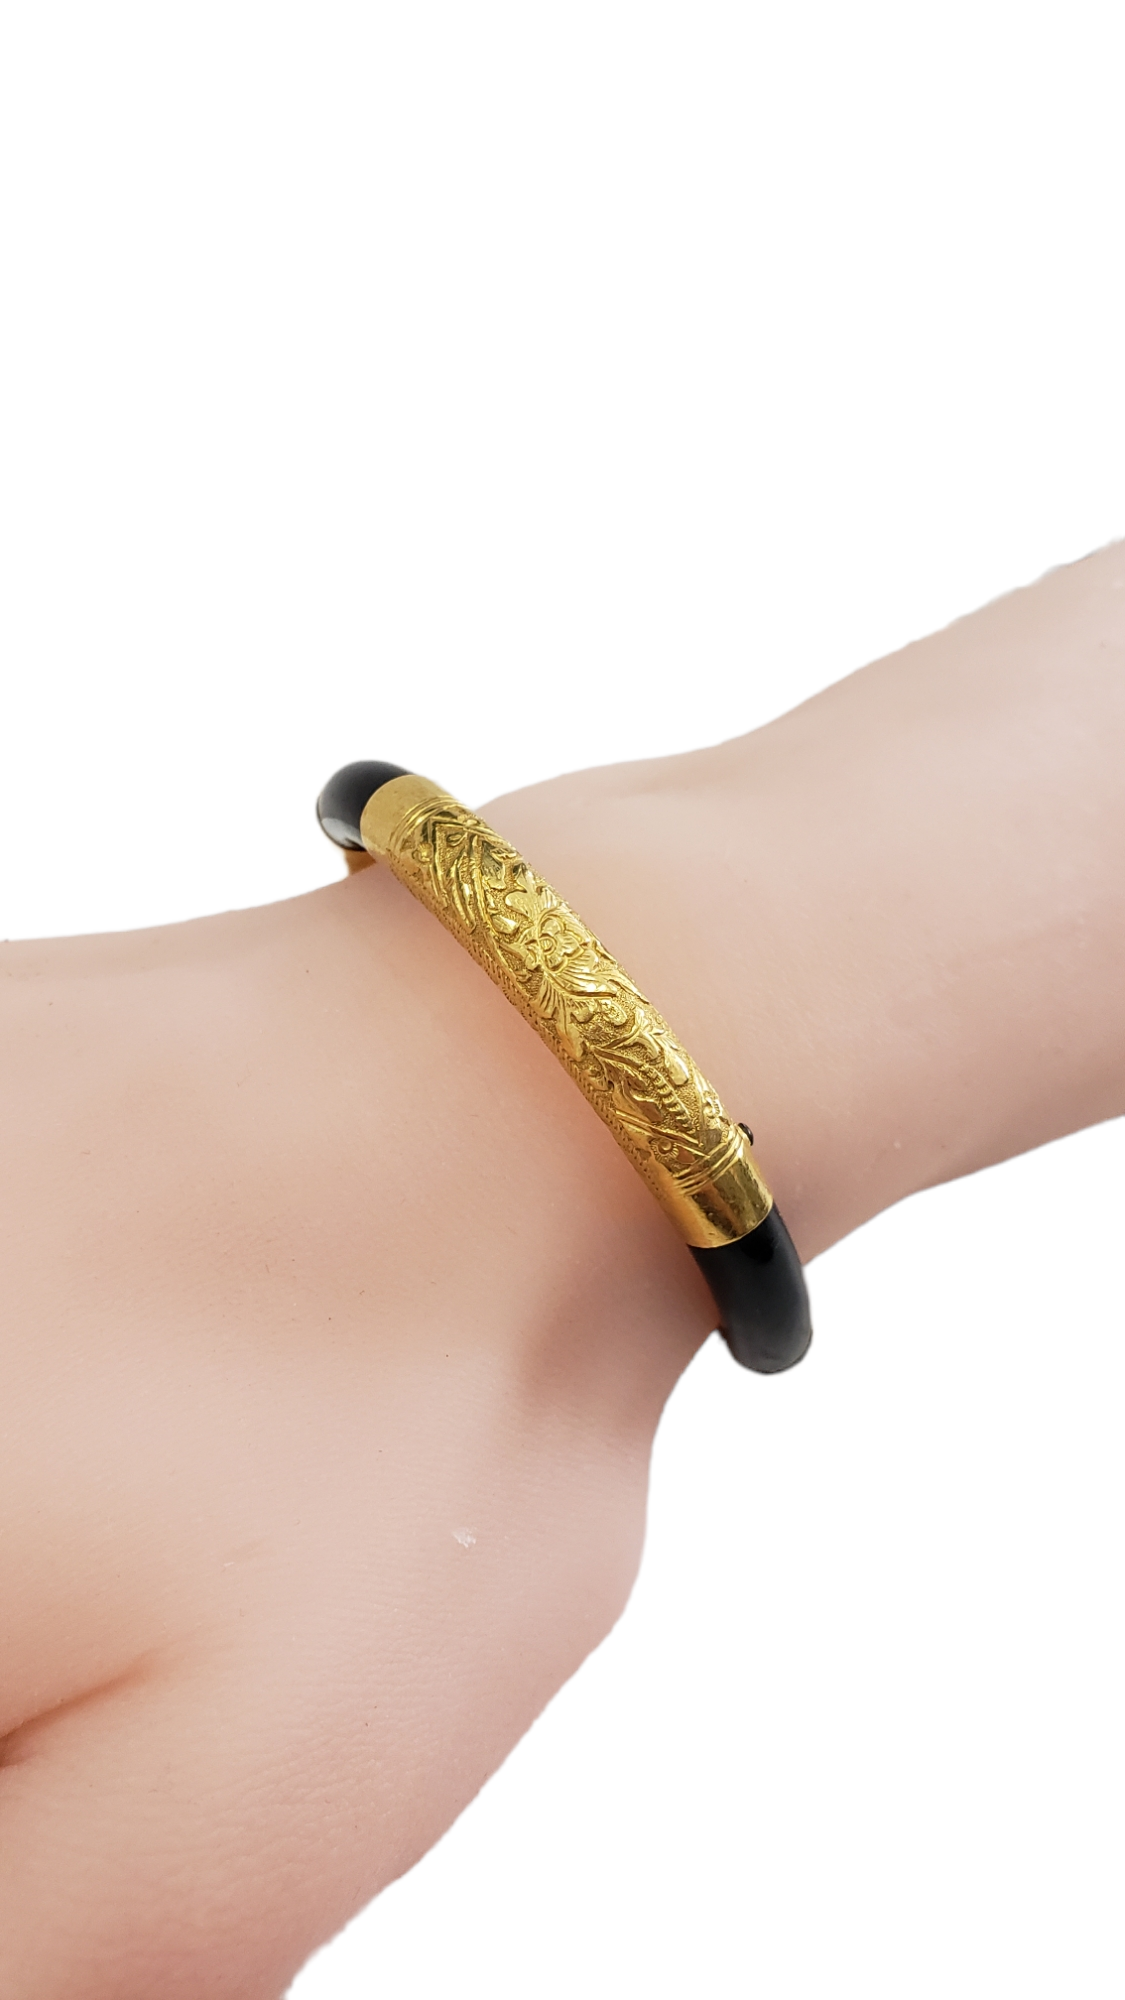 Retailer of 22 carat gold ladies bracelet rh-lb431 | Jewelxy - 214047